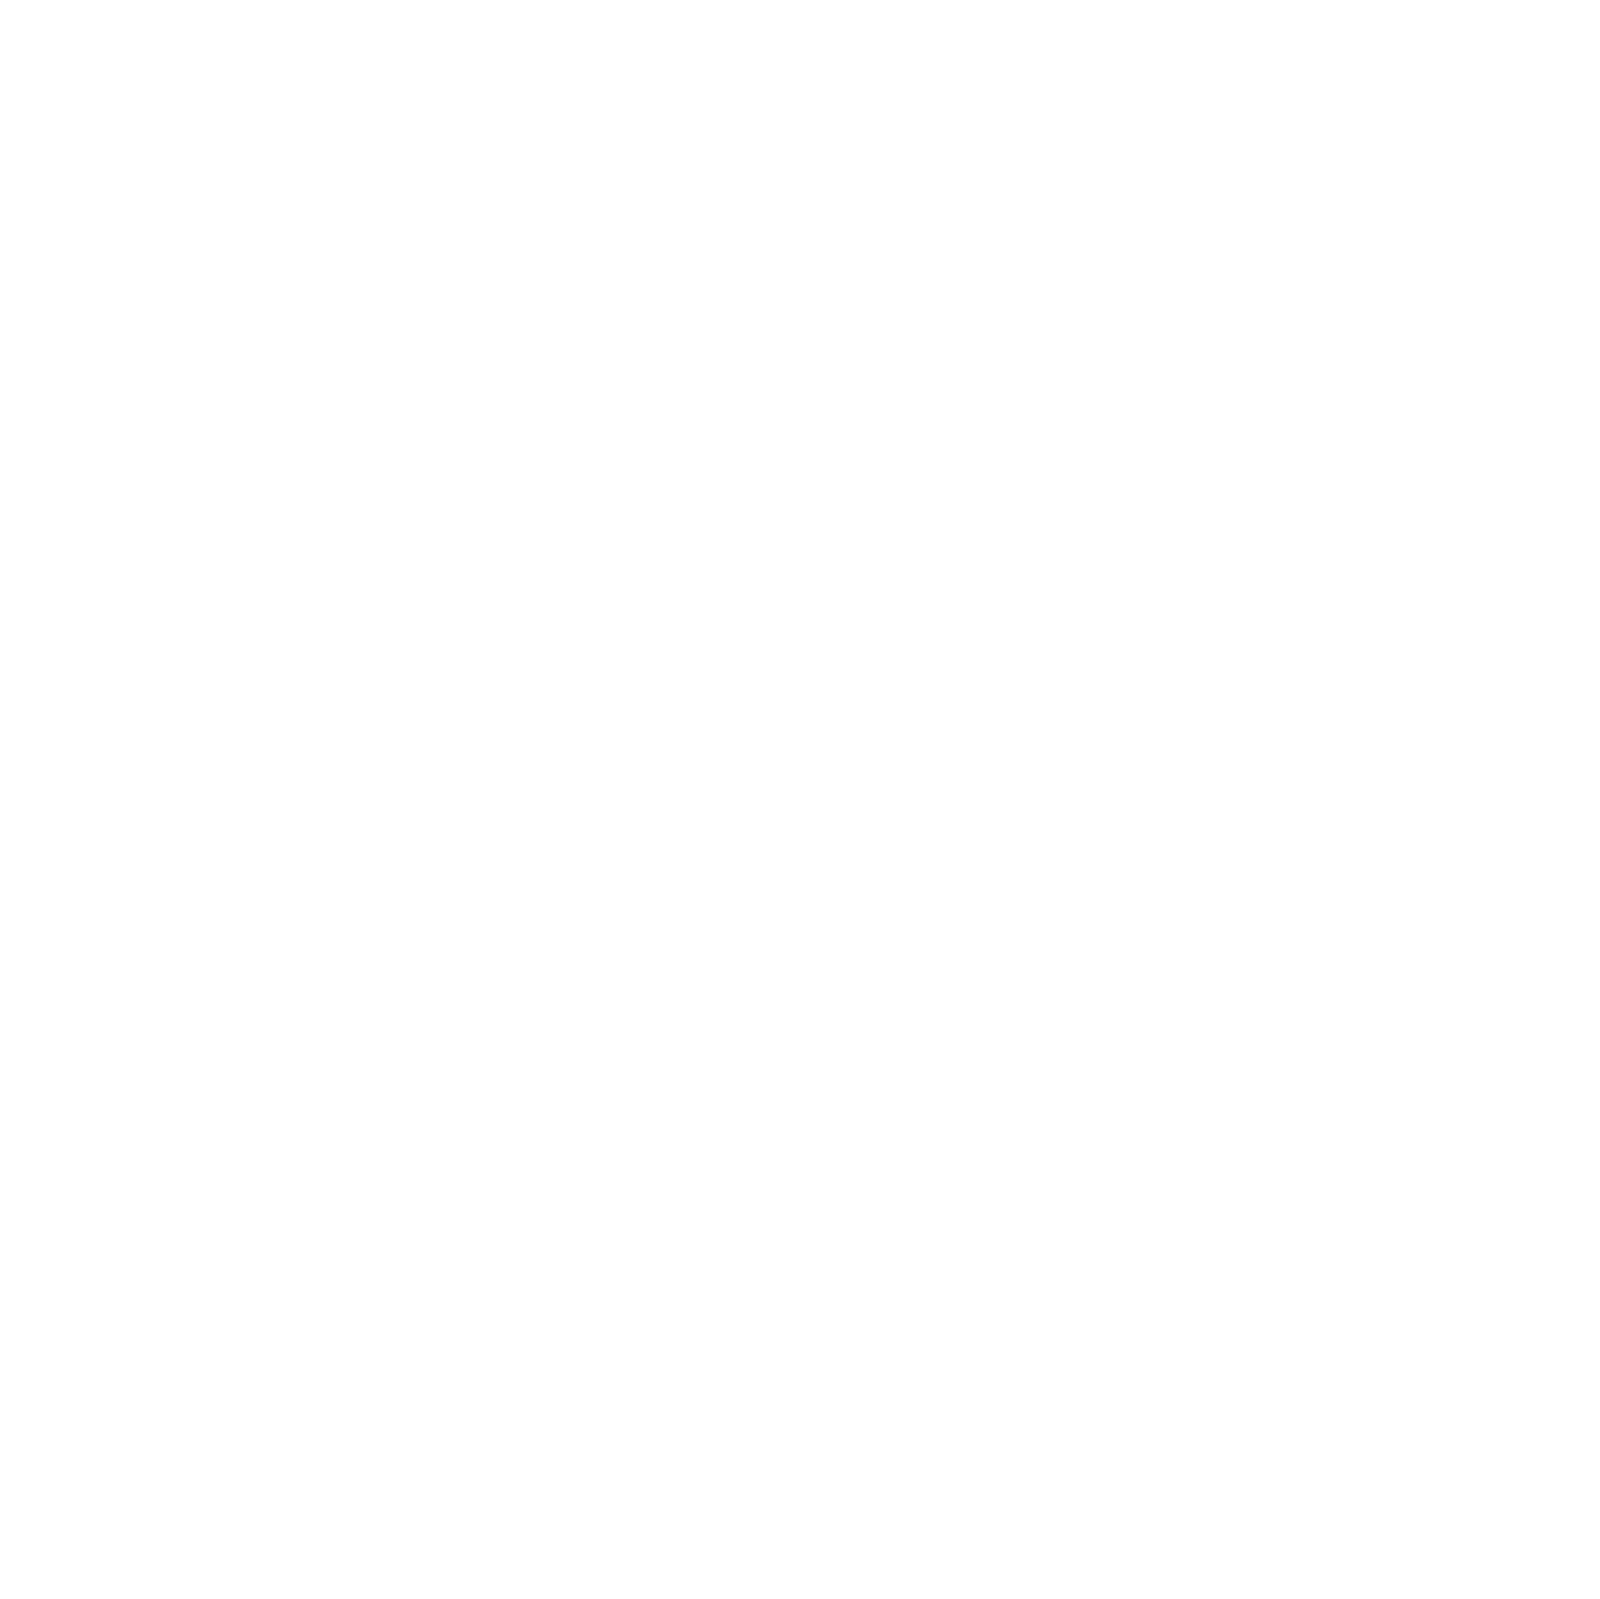 Guaranteed Quality & Purity